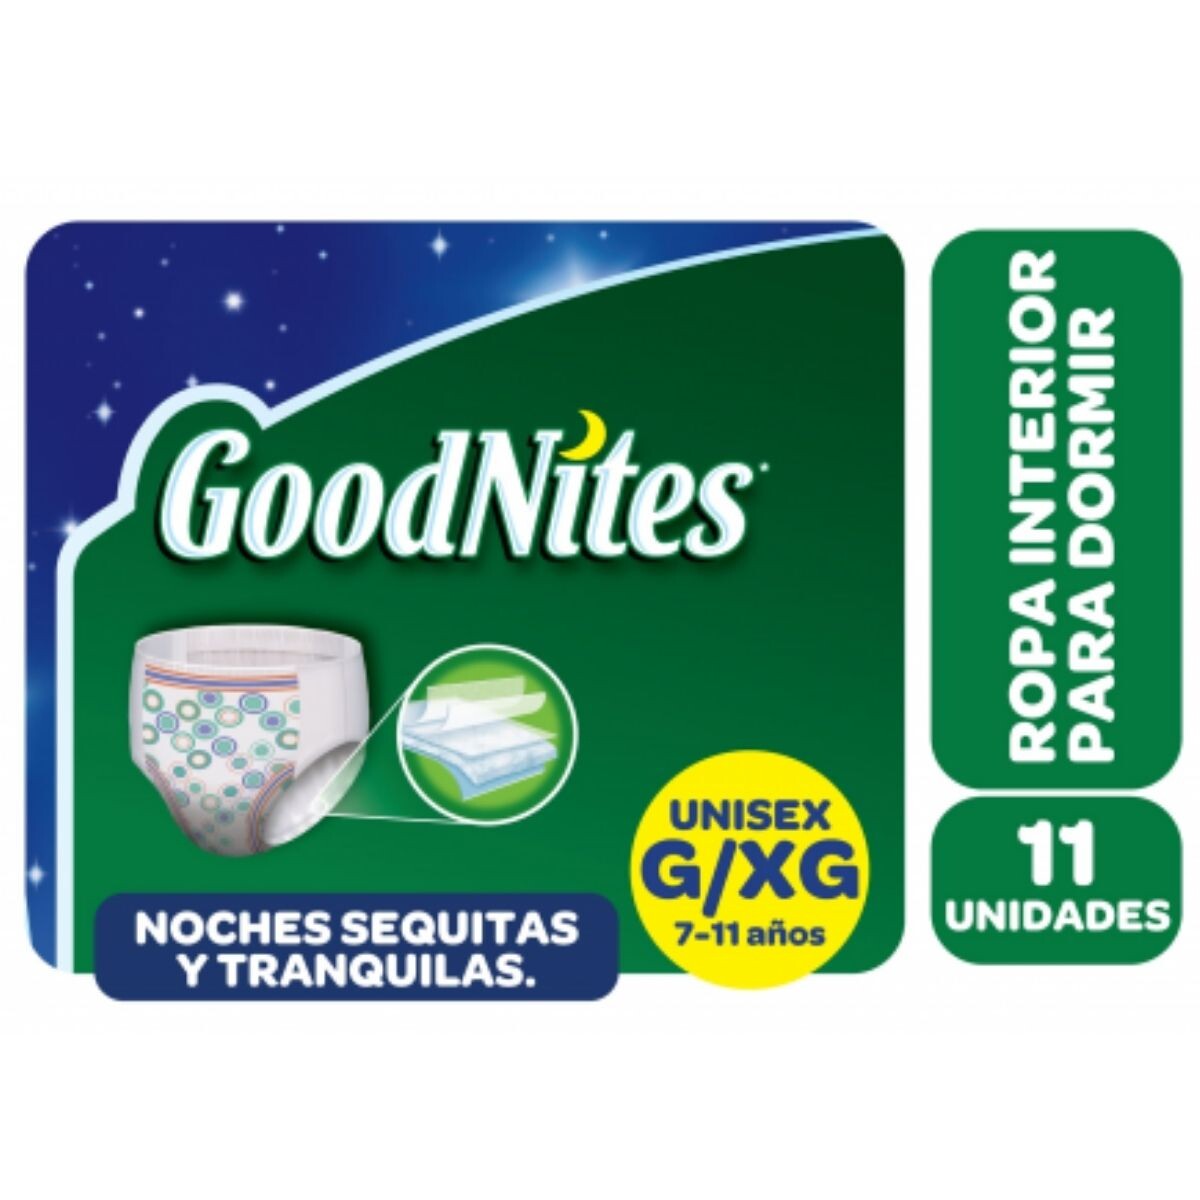 Pañales Goodnites Calzoncillos Nocturnos Unisex G/XG X11 